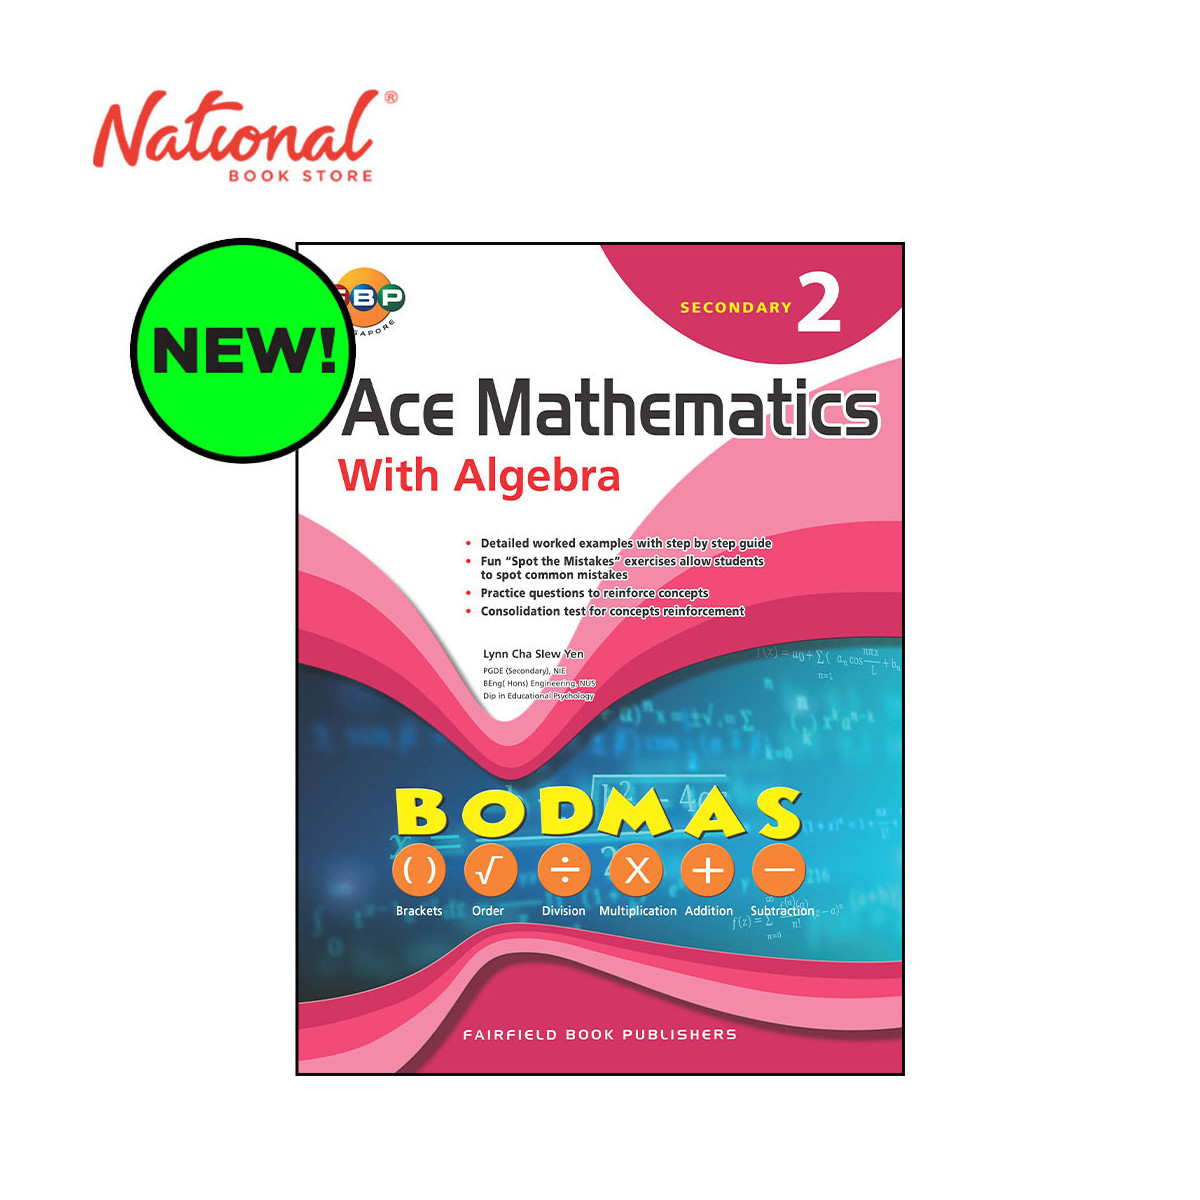 Ace Mathematics with Algebra Secondary 2 by Lynn Cha Siew Yen - Trade Paperback - High School Books